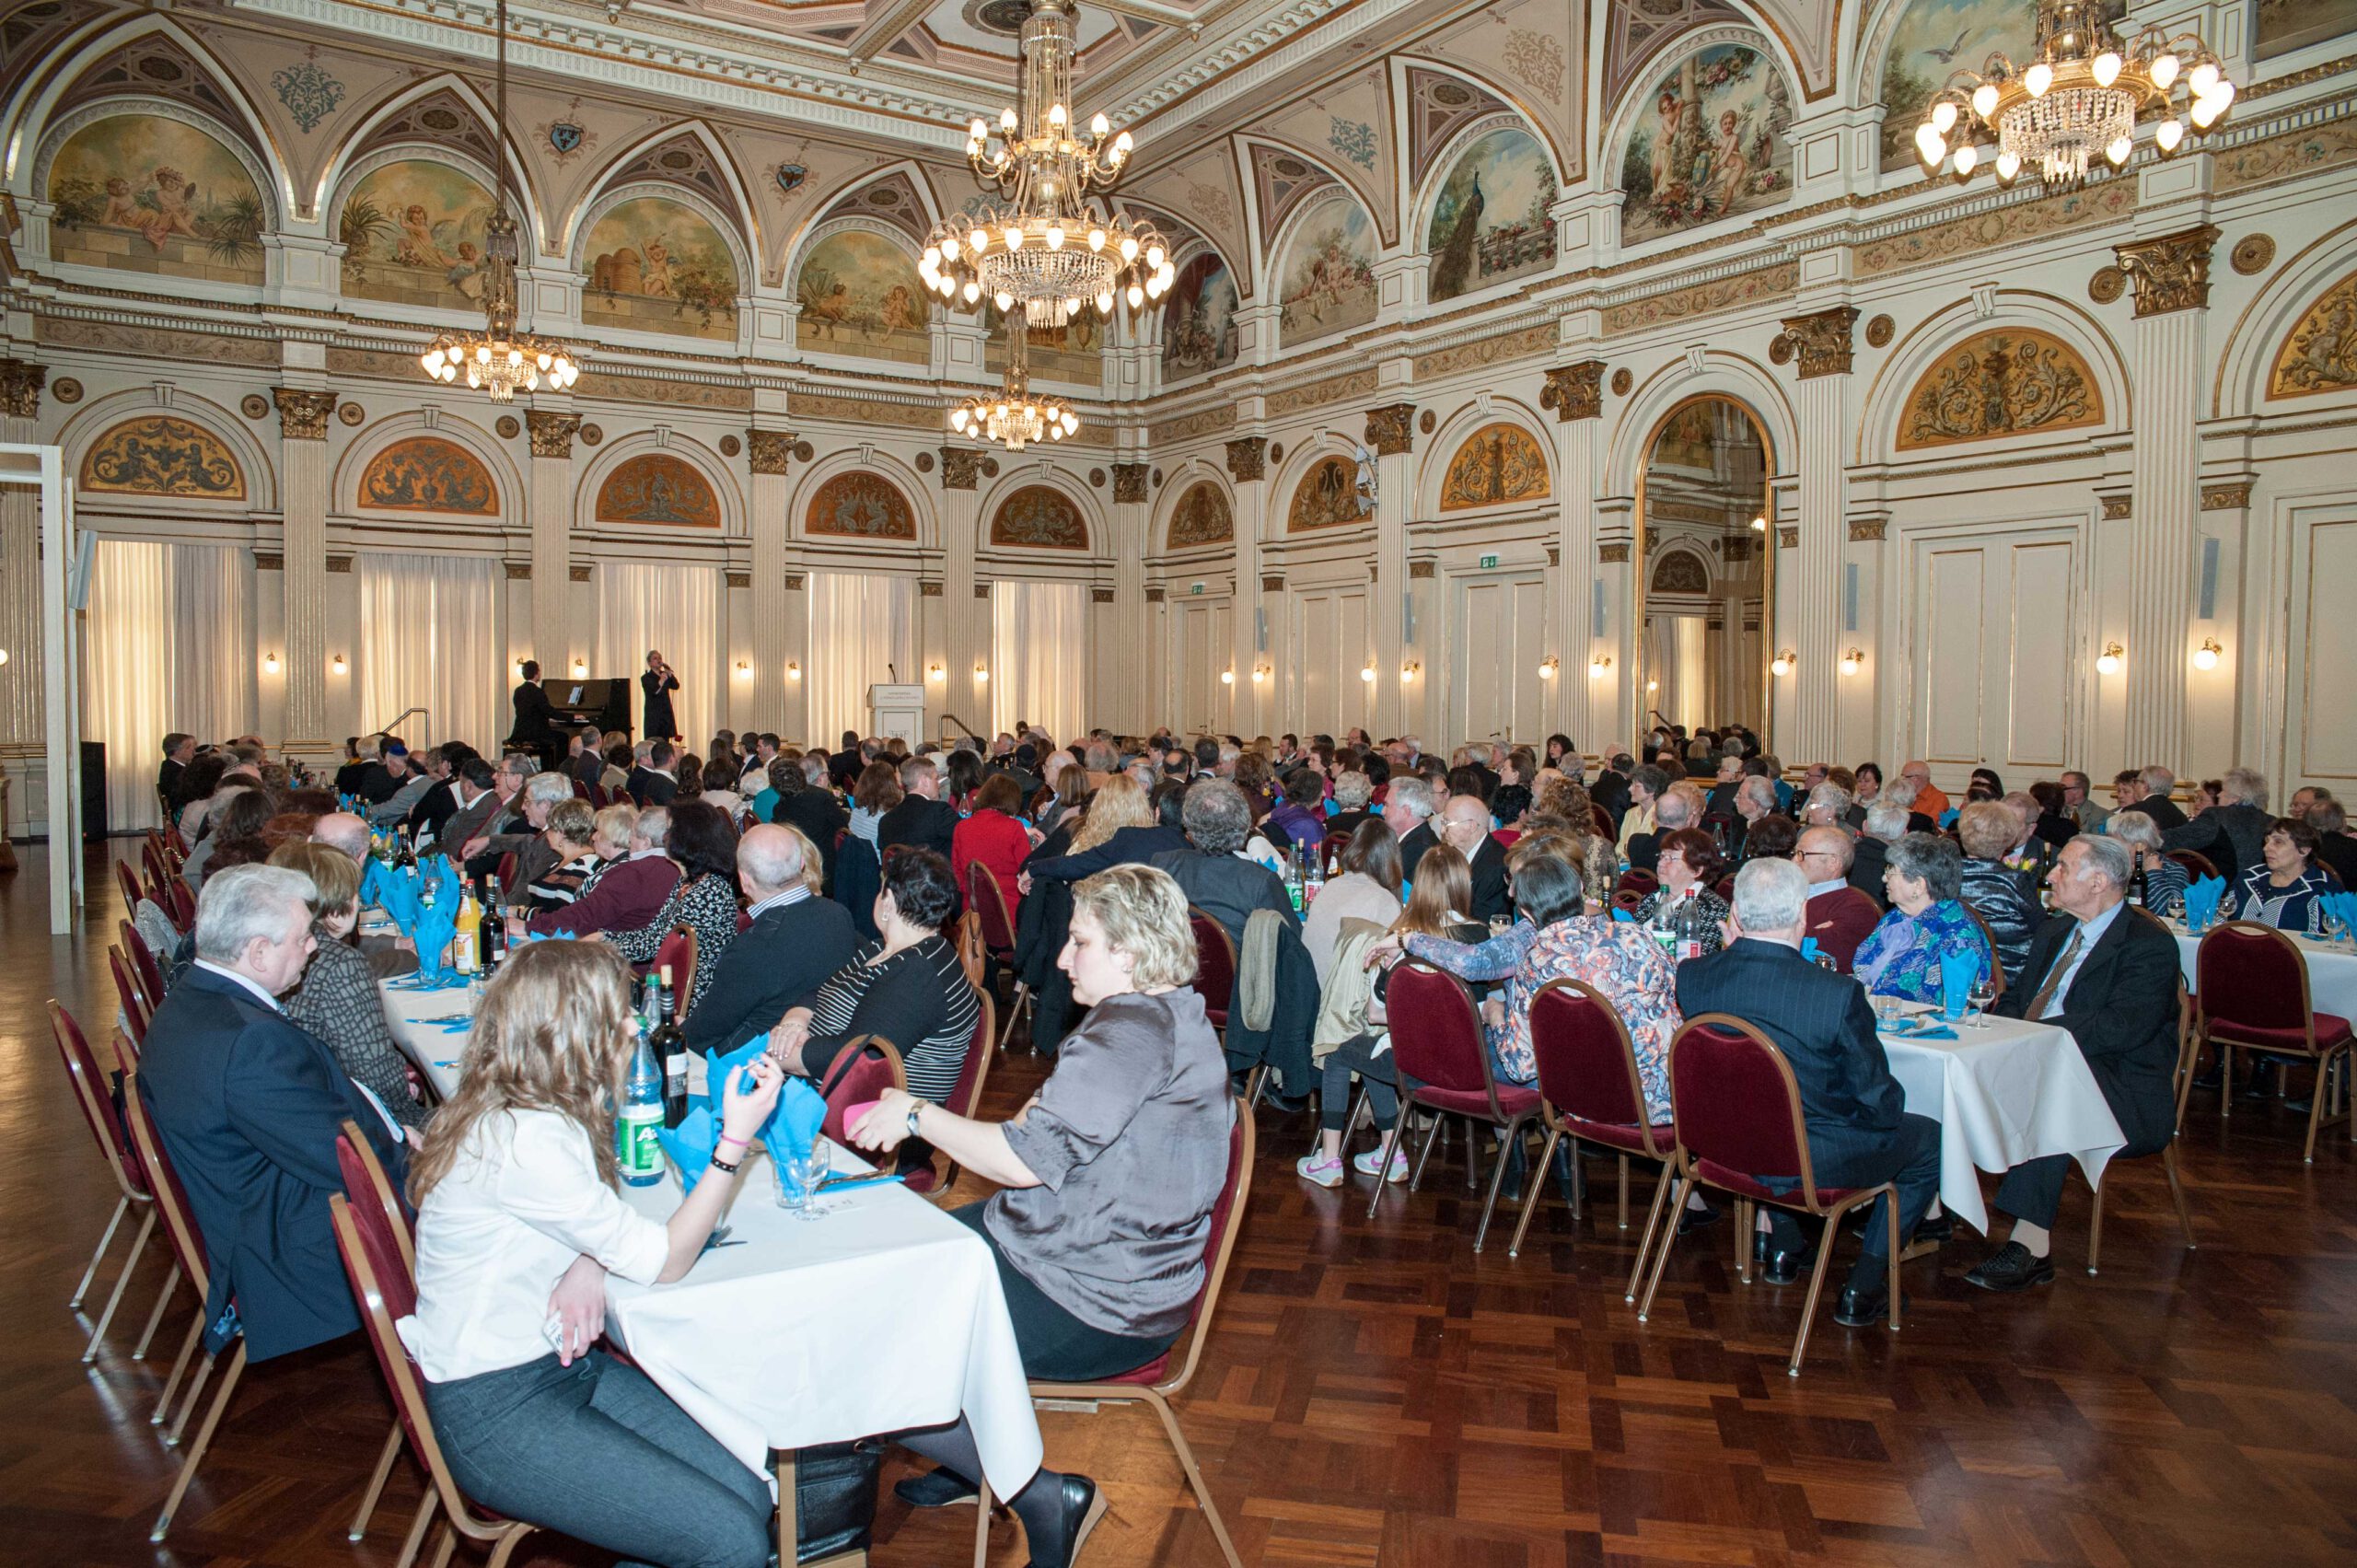 Community event at the Wiesbaden Casino Society. Photographer: Igor Eisenschtat. Wiesbaden Jewish Community Collection